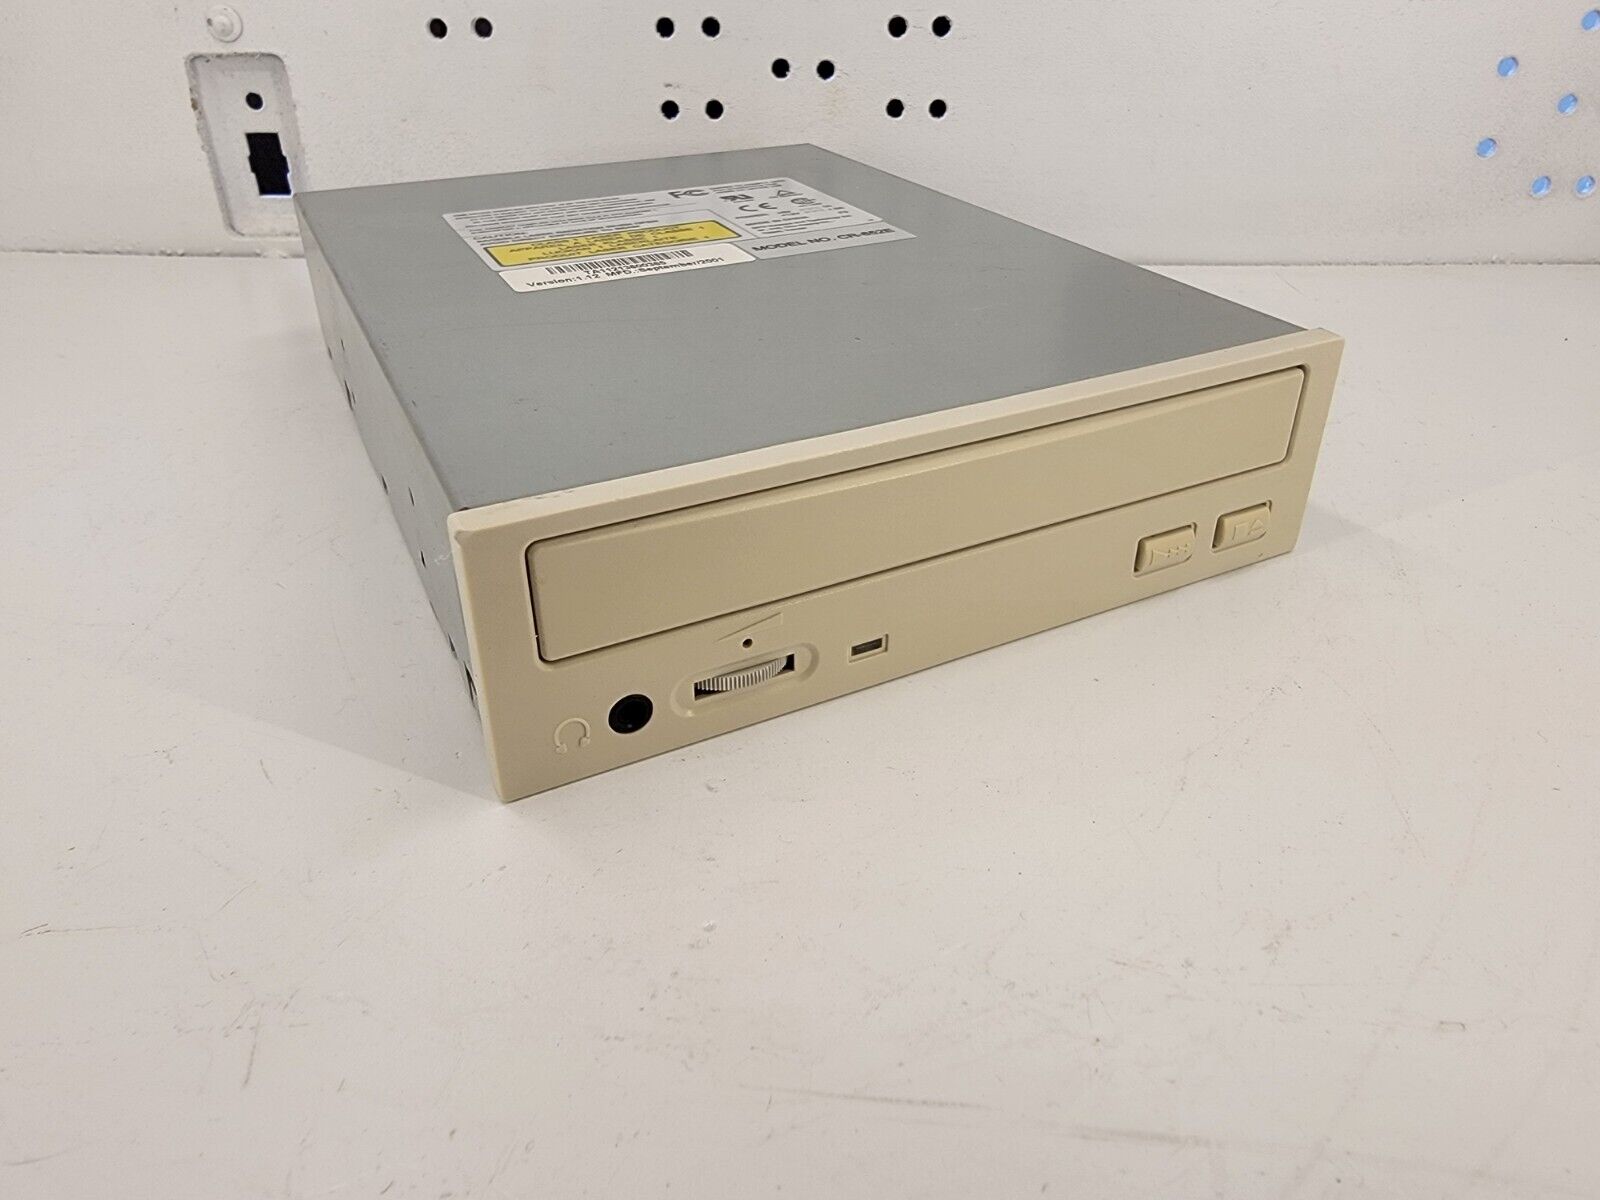 AOpen 52x IDE Internal Beige CD-ROM Drive CD-952E/AKH - Untested